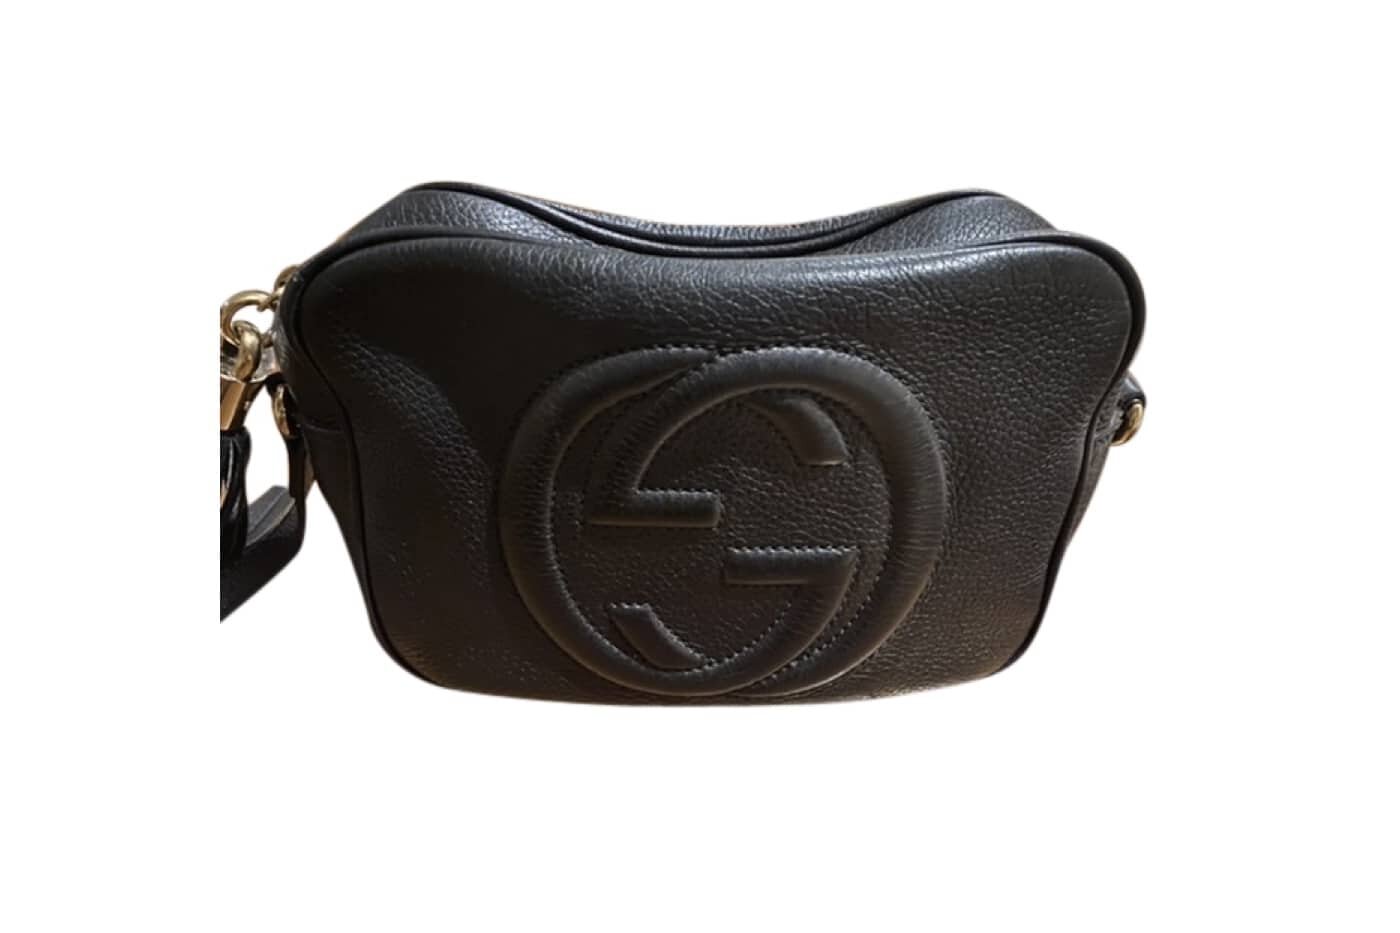 NWT!!! Gucci Soho Gg Chain Tote Satchel Black Embossed Leather Shoulder Bag  | eBay